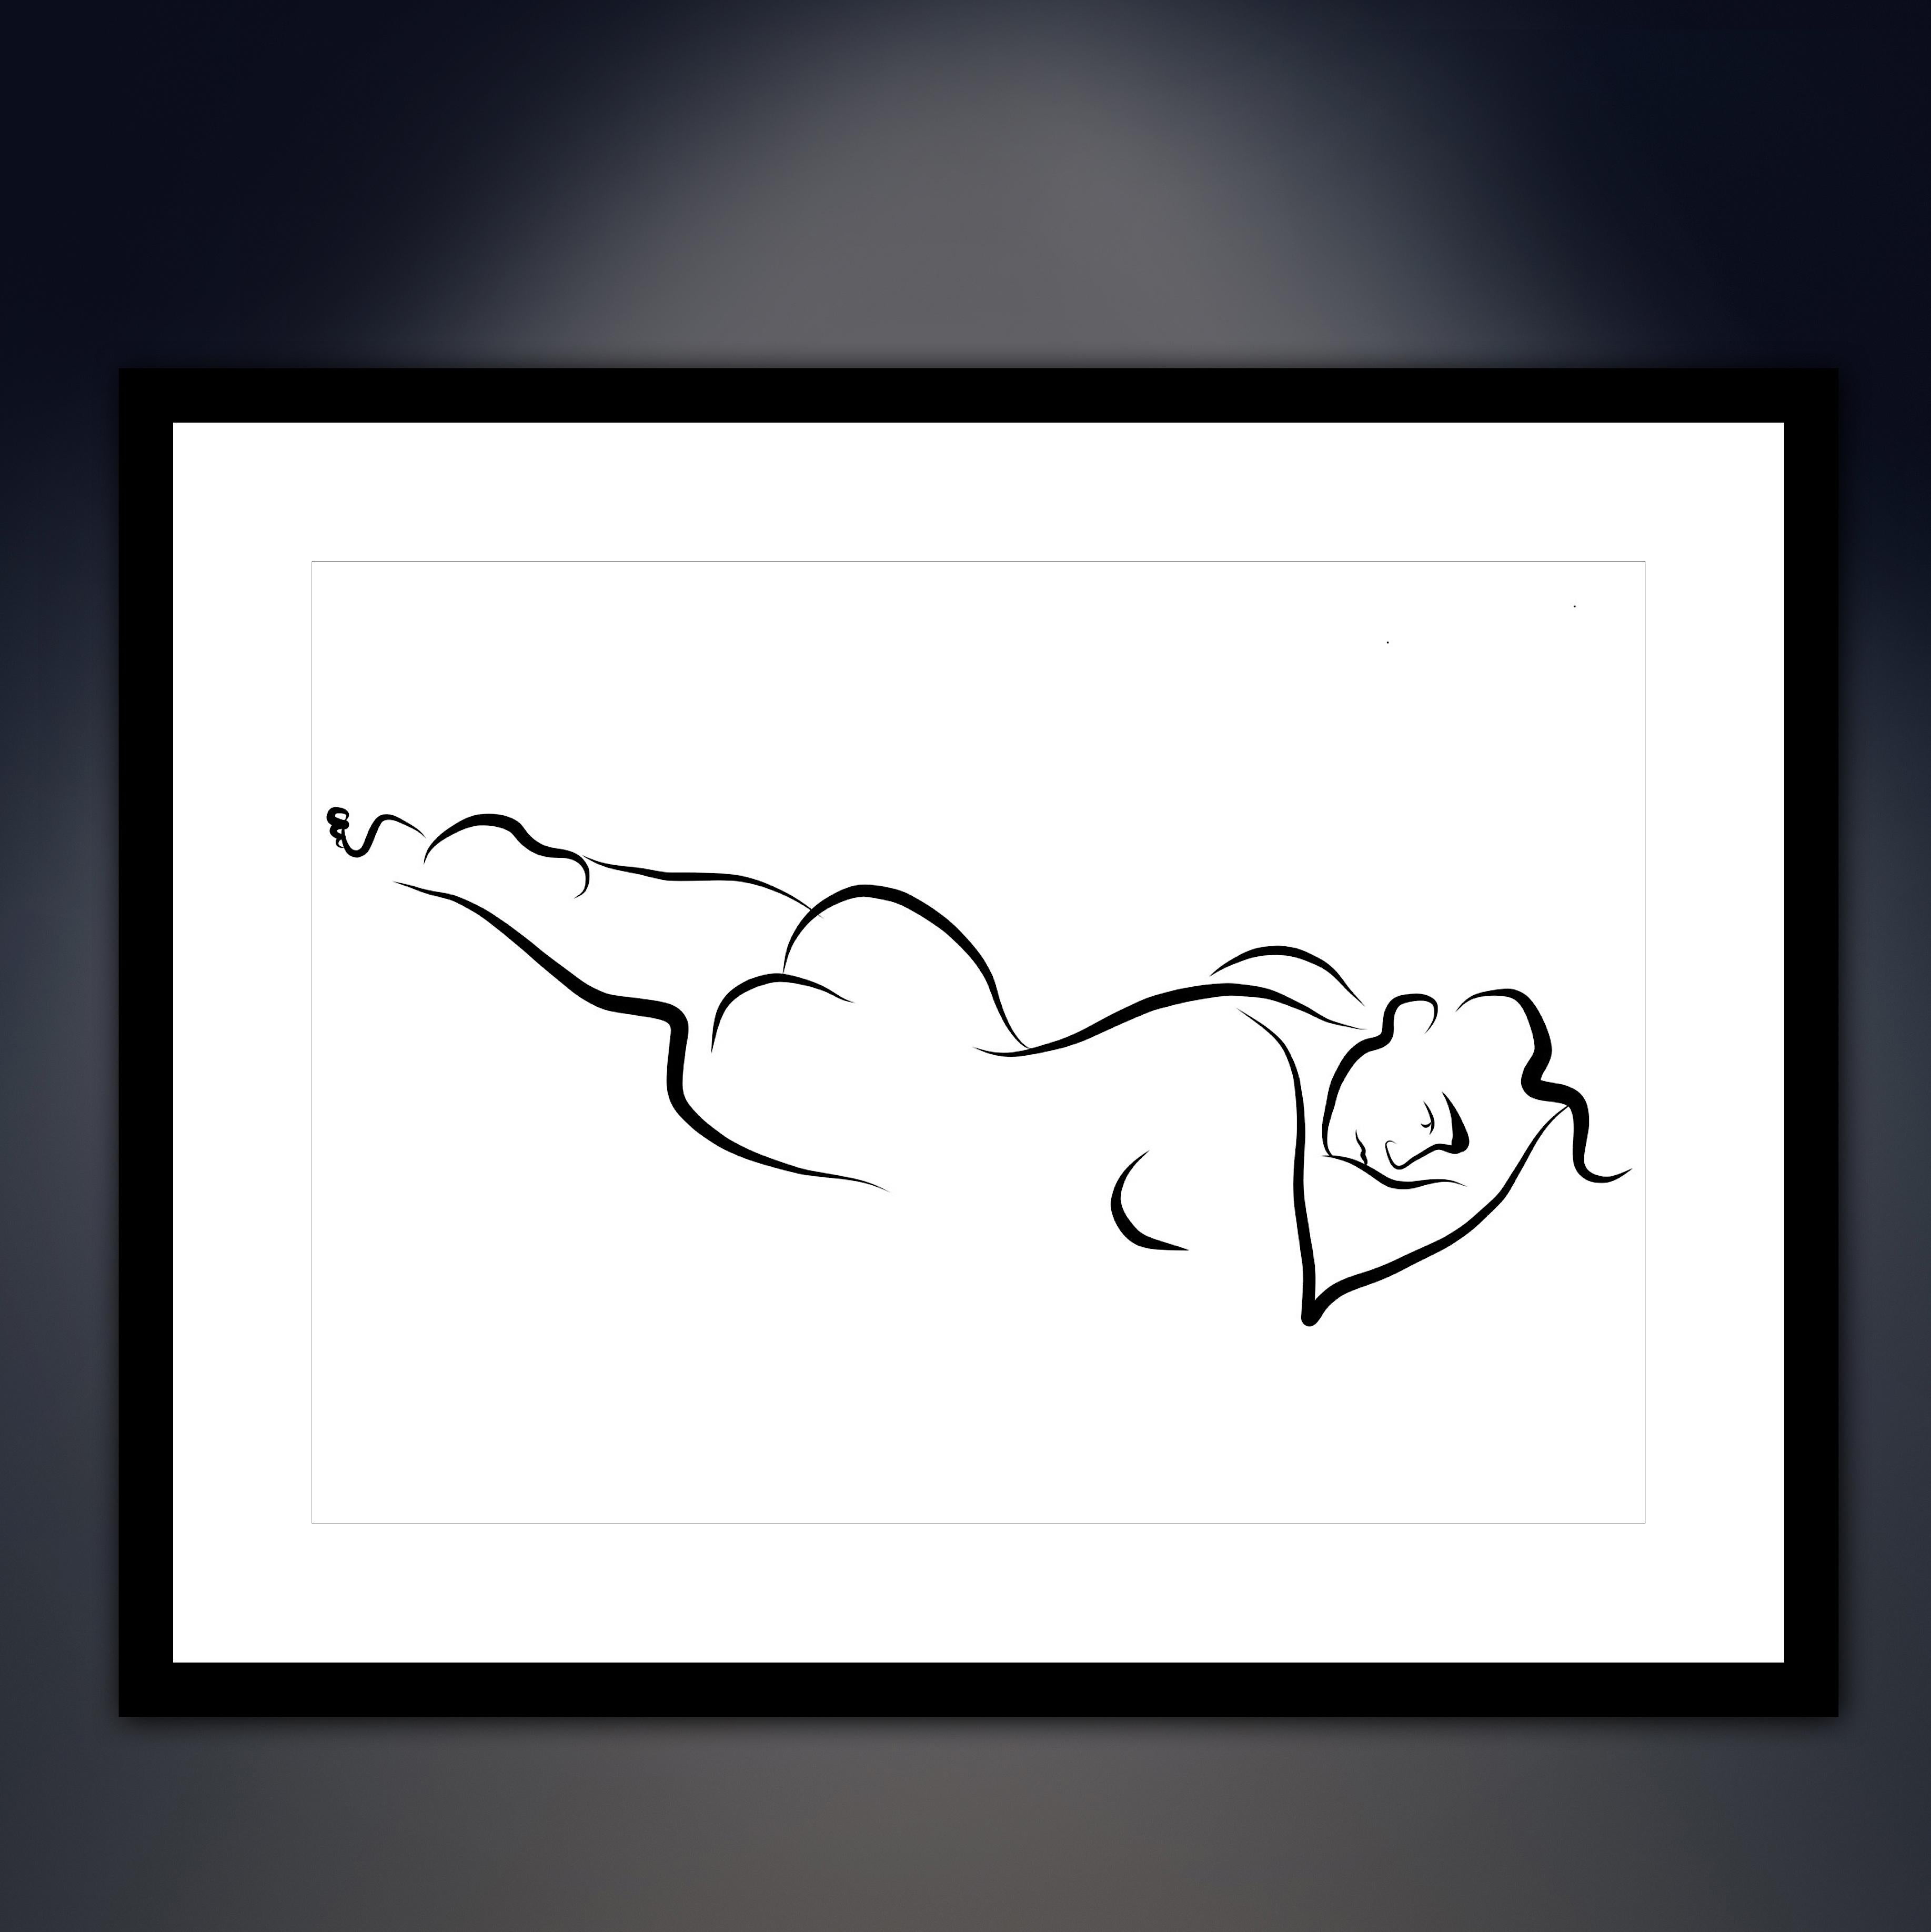 Haiku #1, 1/50 - Digital Vector Drawing Reclining Female Nude Woman Figure - Contemporary Print by Michael Binkley